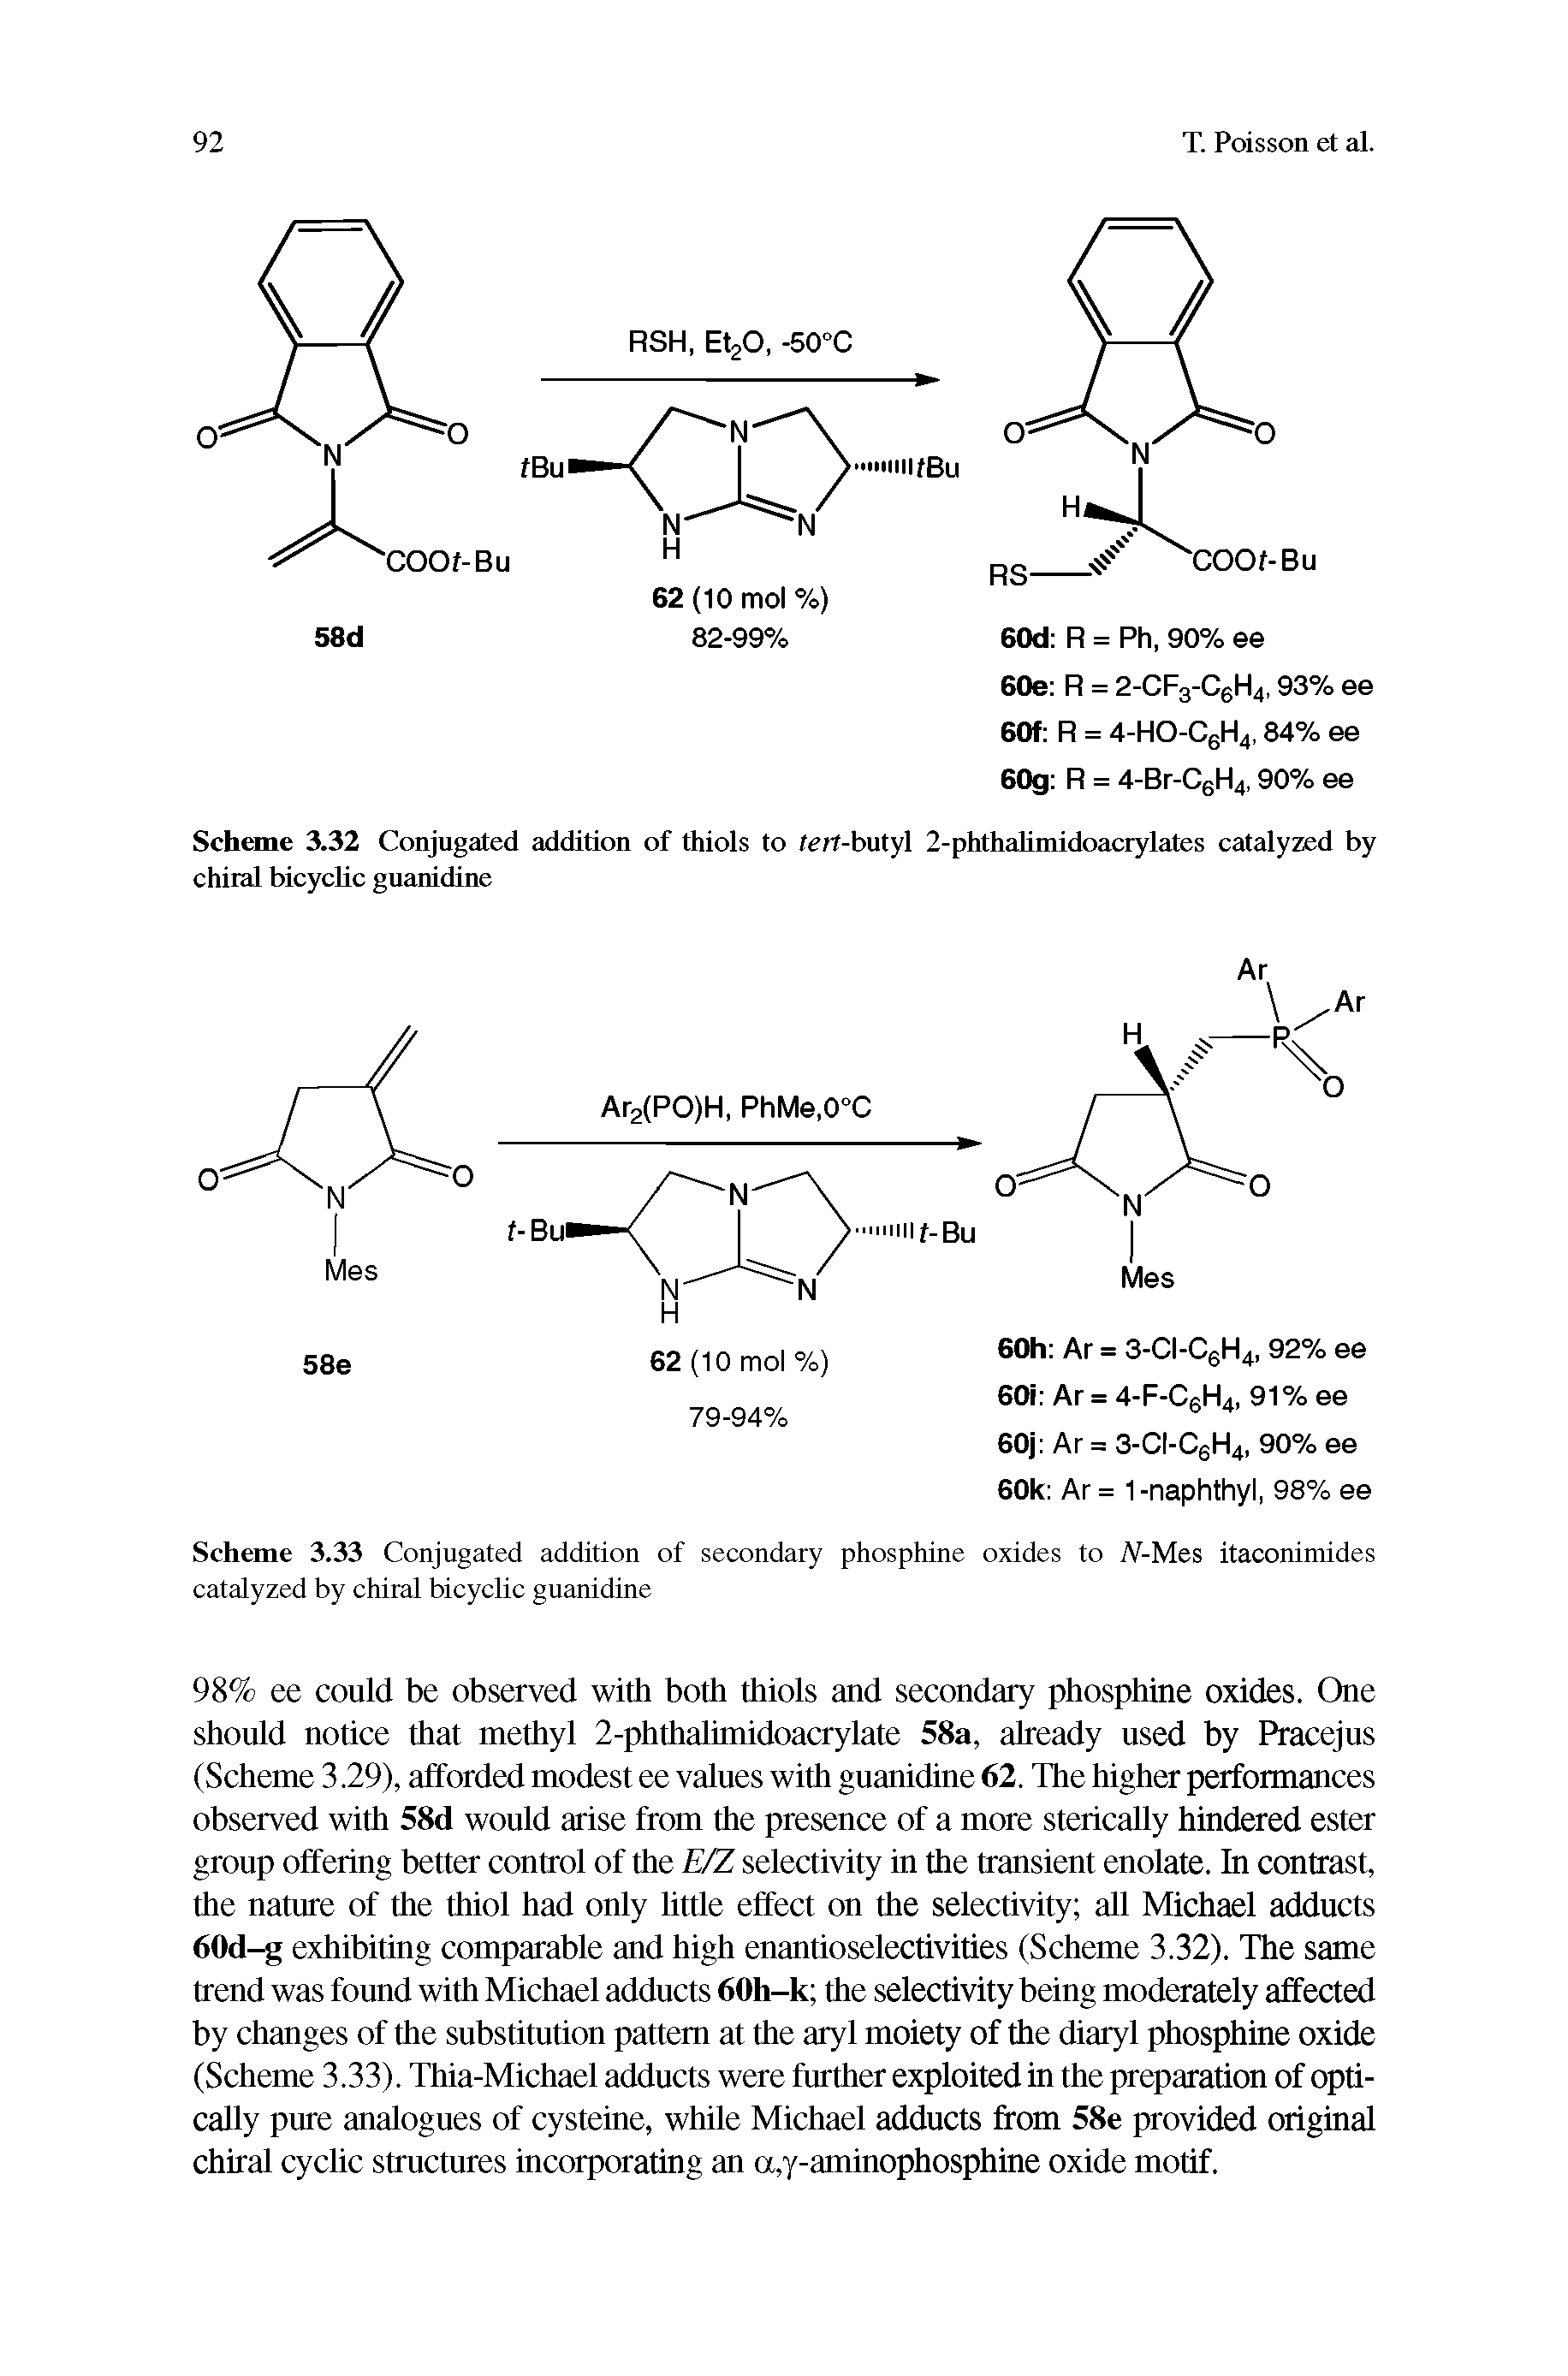 Scheme 3.32 Conjugated addition of thiols to tert-butyl 2-phtha]imidoacrylates catalyzed by chiral bicyclic guanidine...